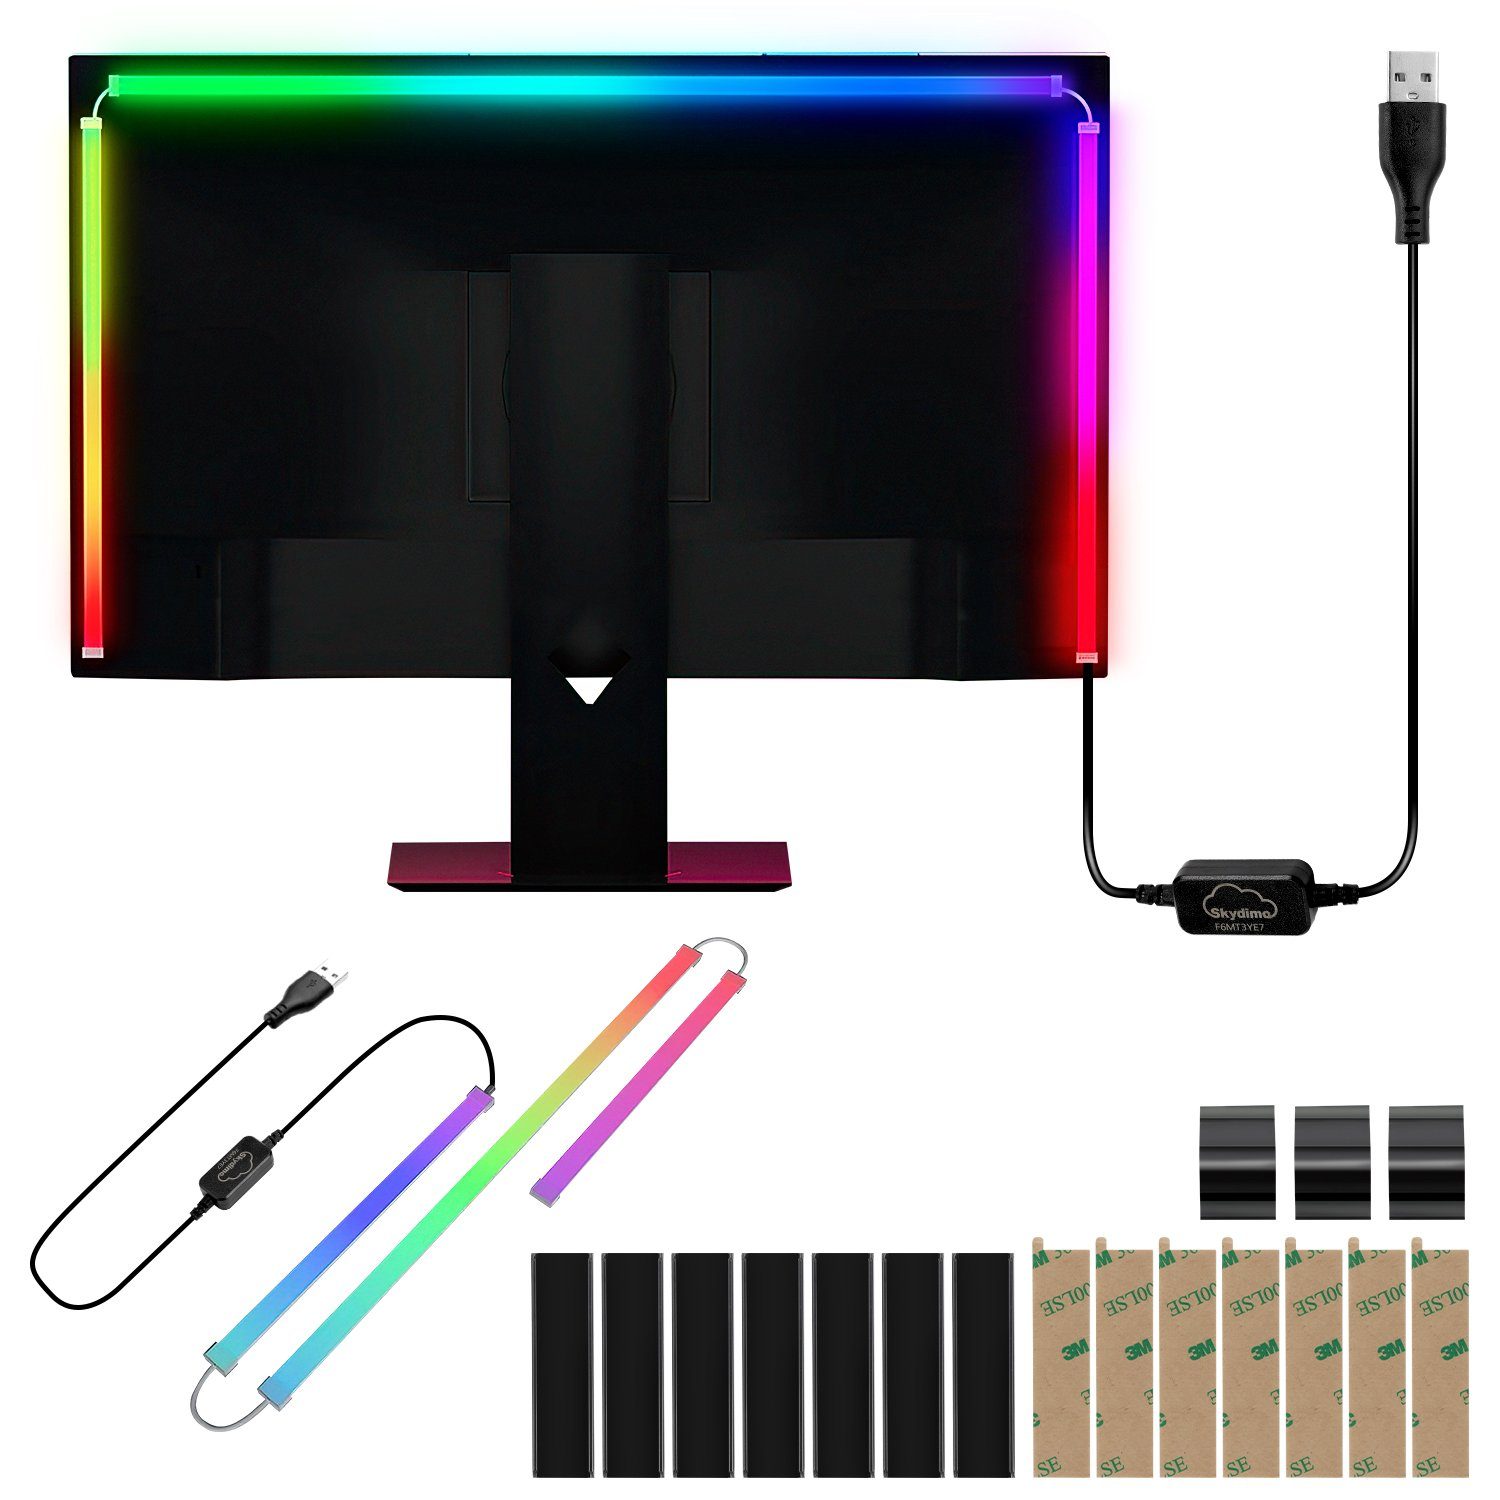 PC Stripe Backlight Gimisgu LichtBand 5050SMD TV LED-Lichterkette Streifen Beleuchtung USB LED